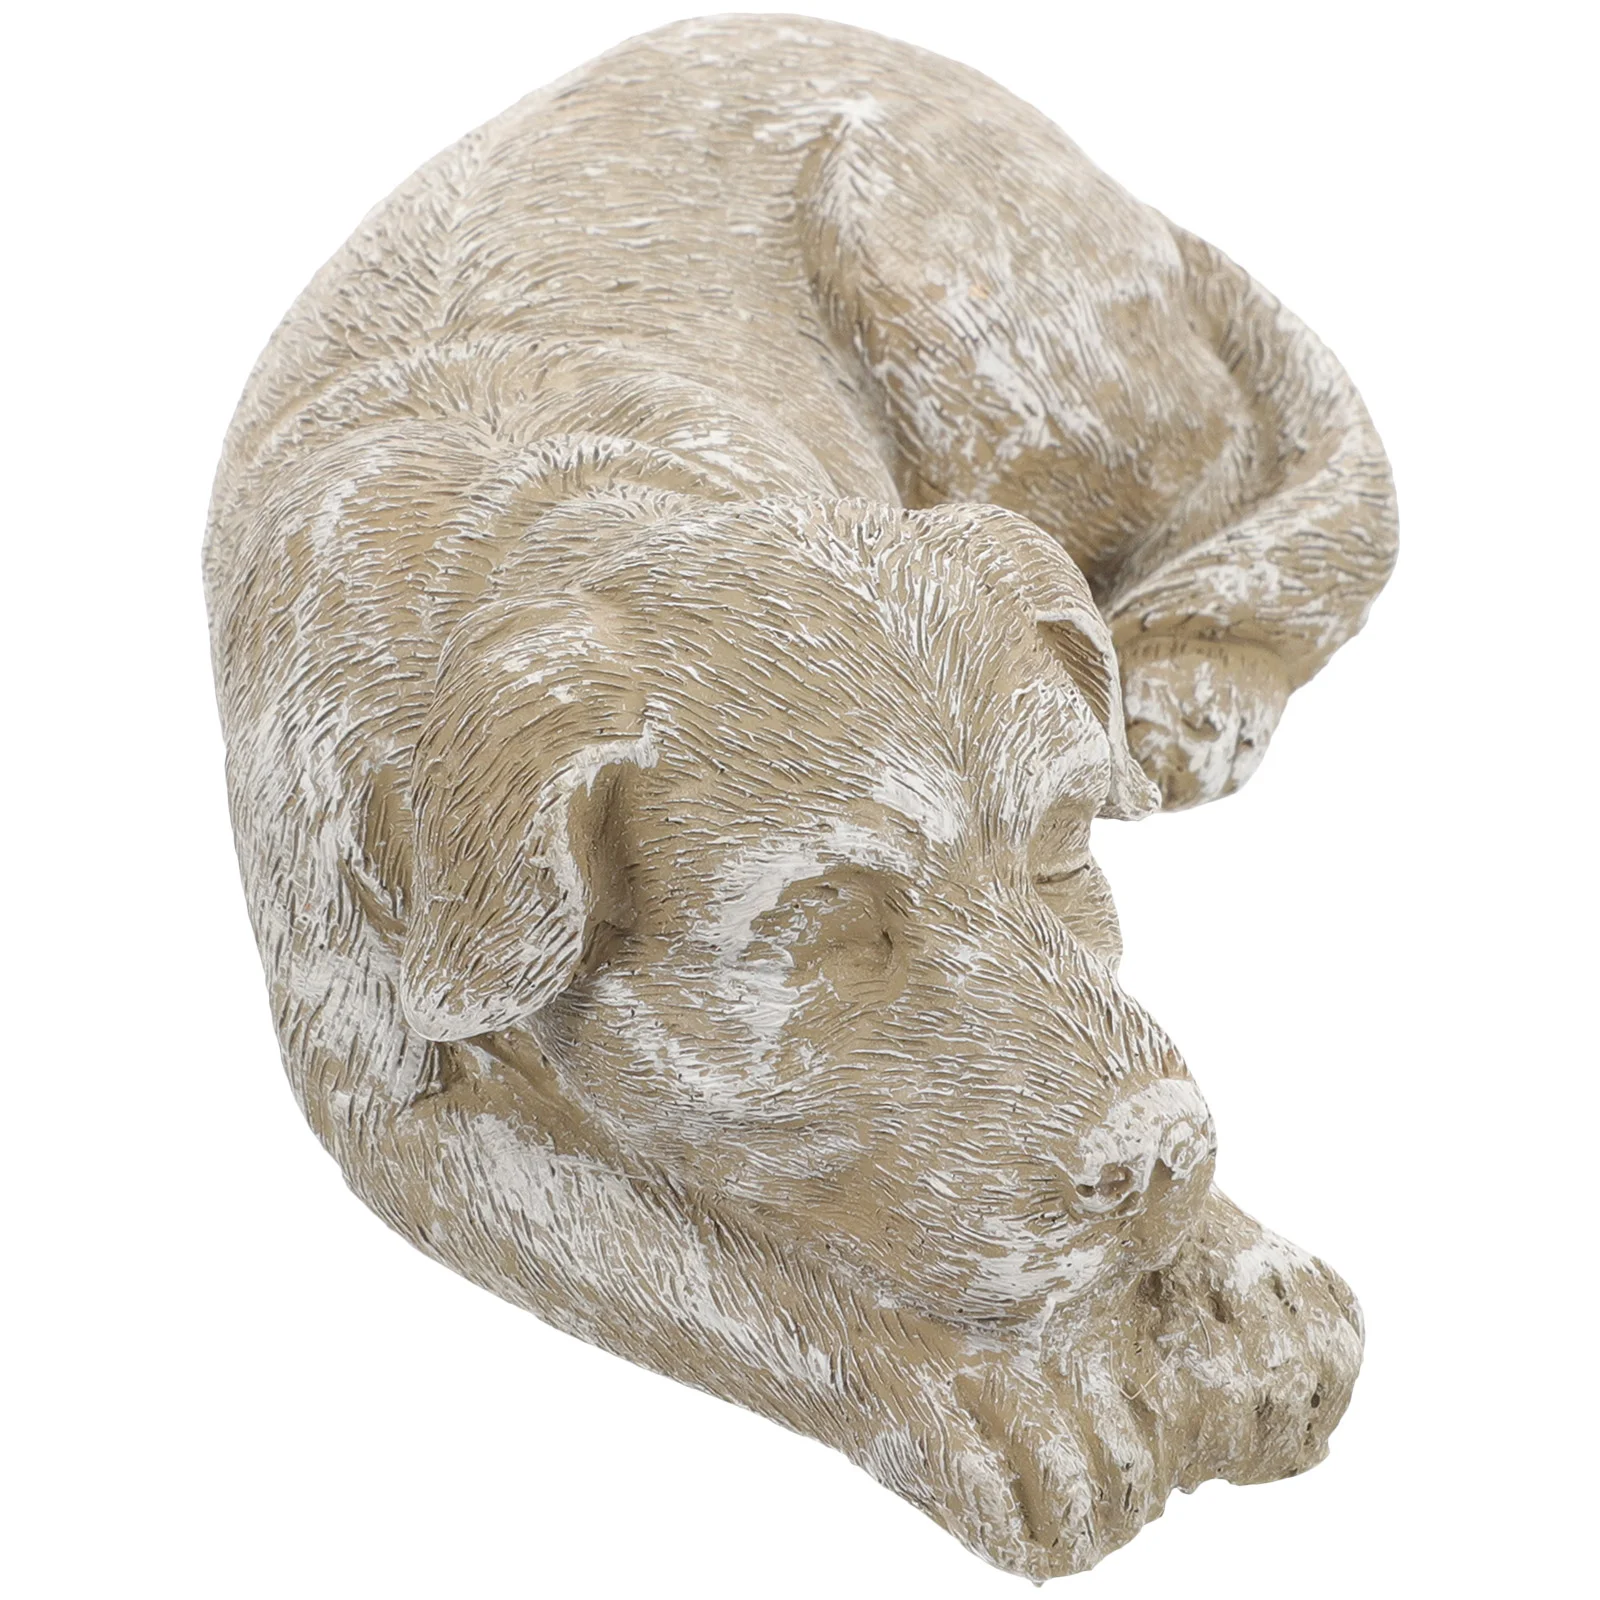 

Dog Memorial Headstone Passing Gift Tombstone Statue Tribute Pet Animal Statute Ornament